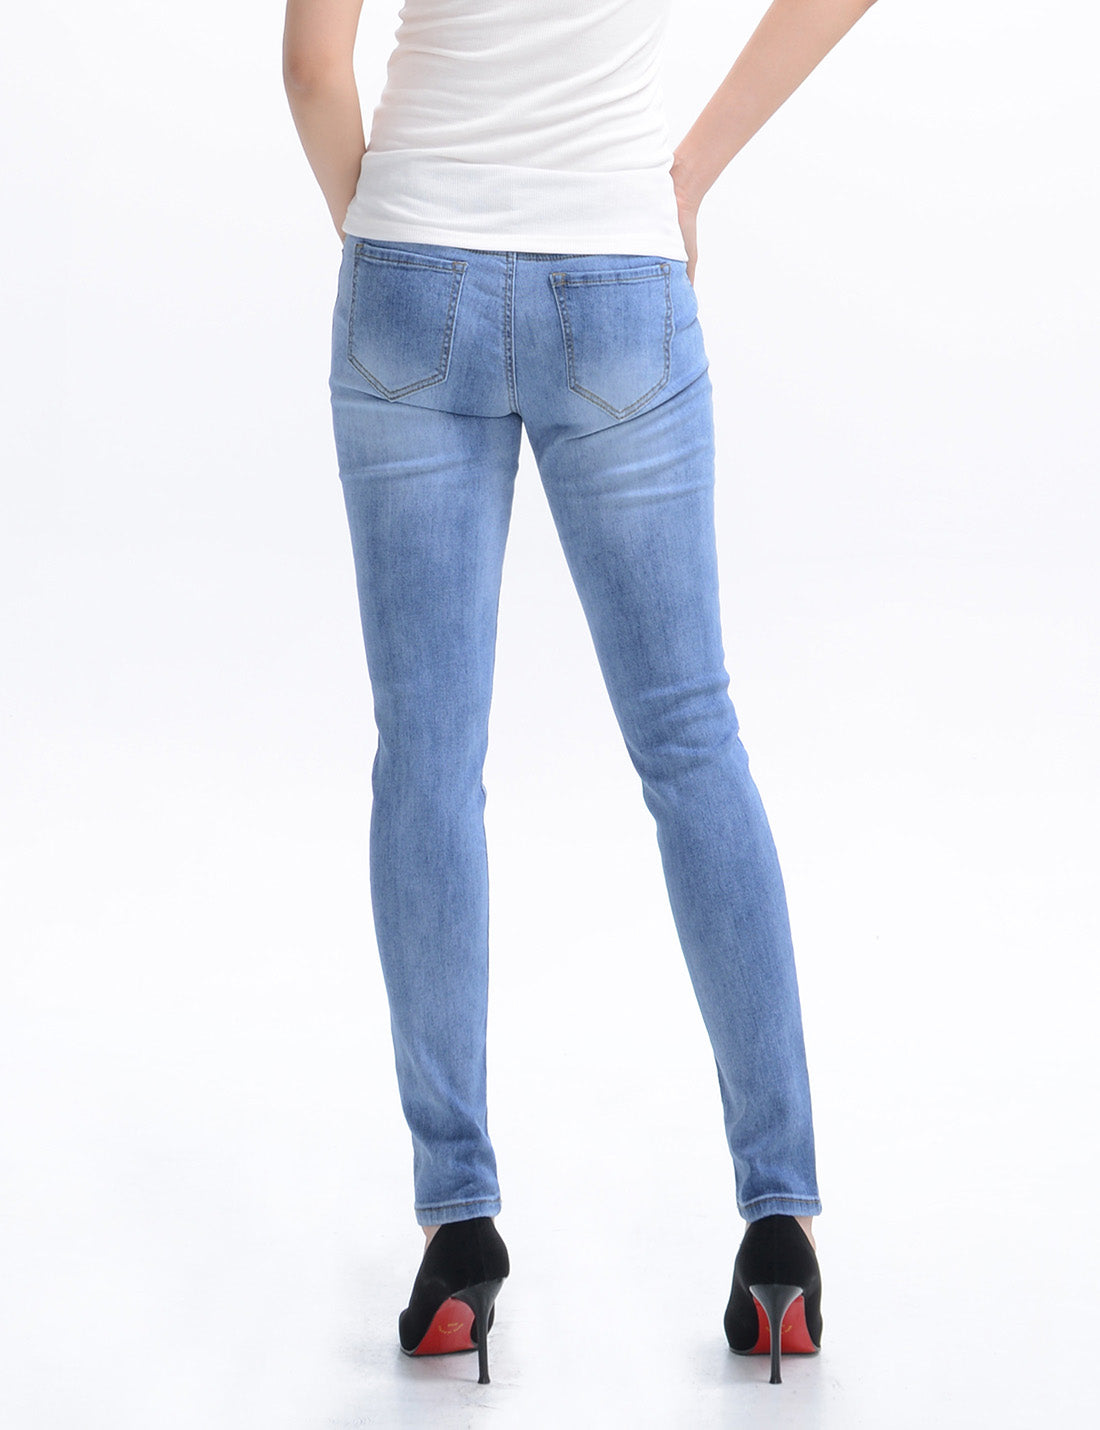 Light Blue Washed Skinny Jeans Stretch Denim Pants